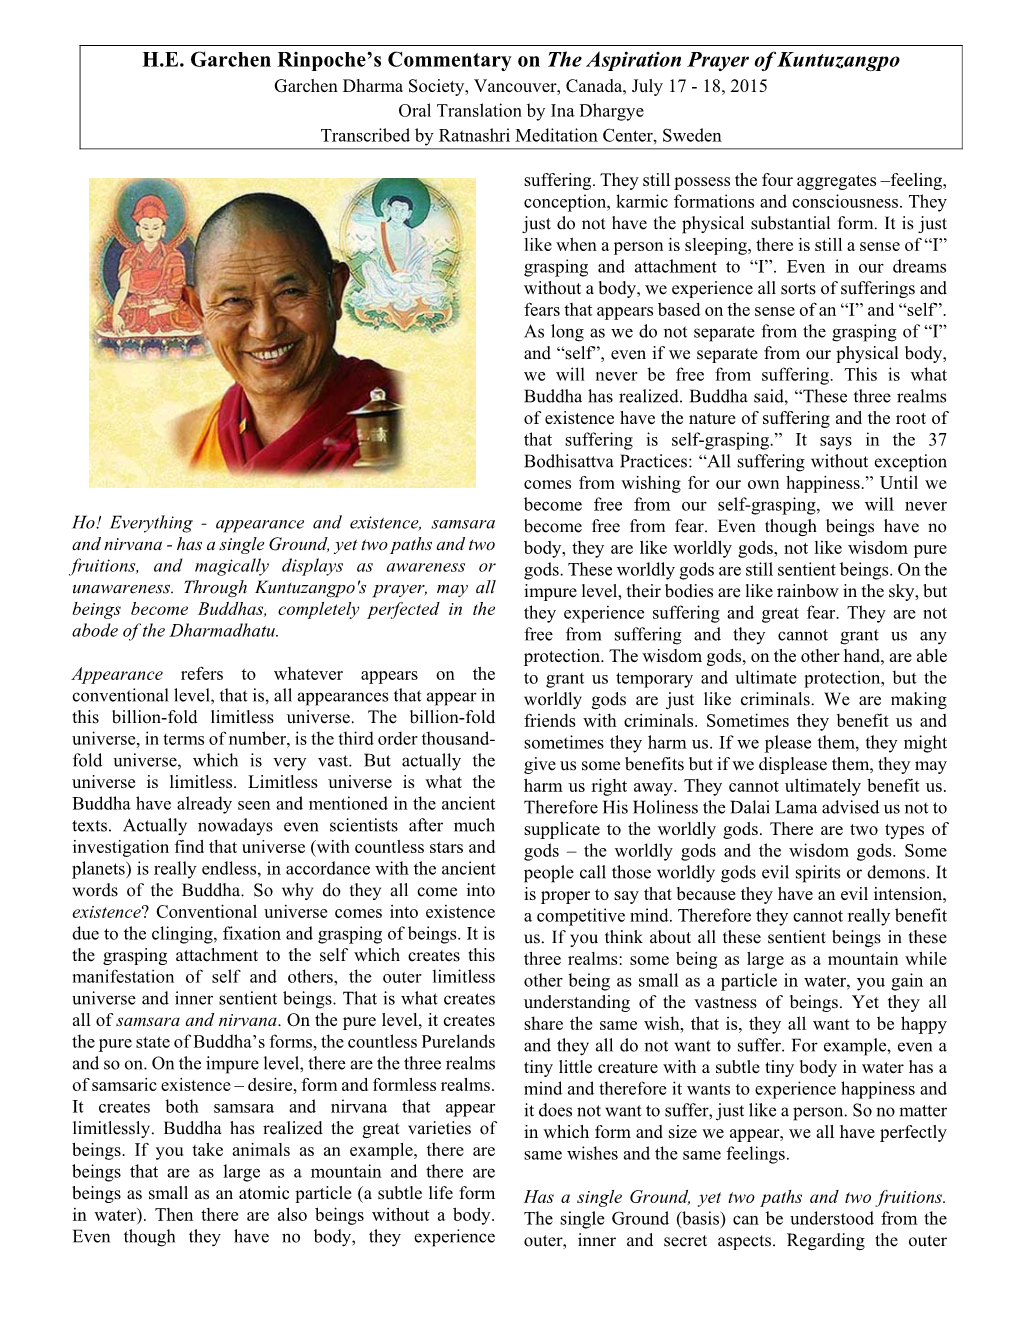 H.E. Garchen Rinpoche's Commentary on the Aspiration